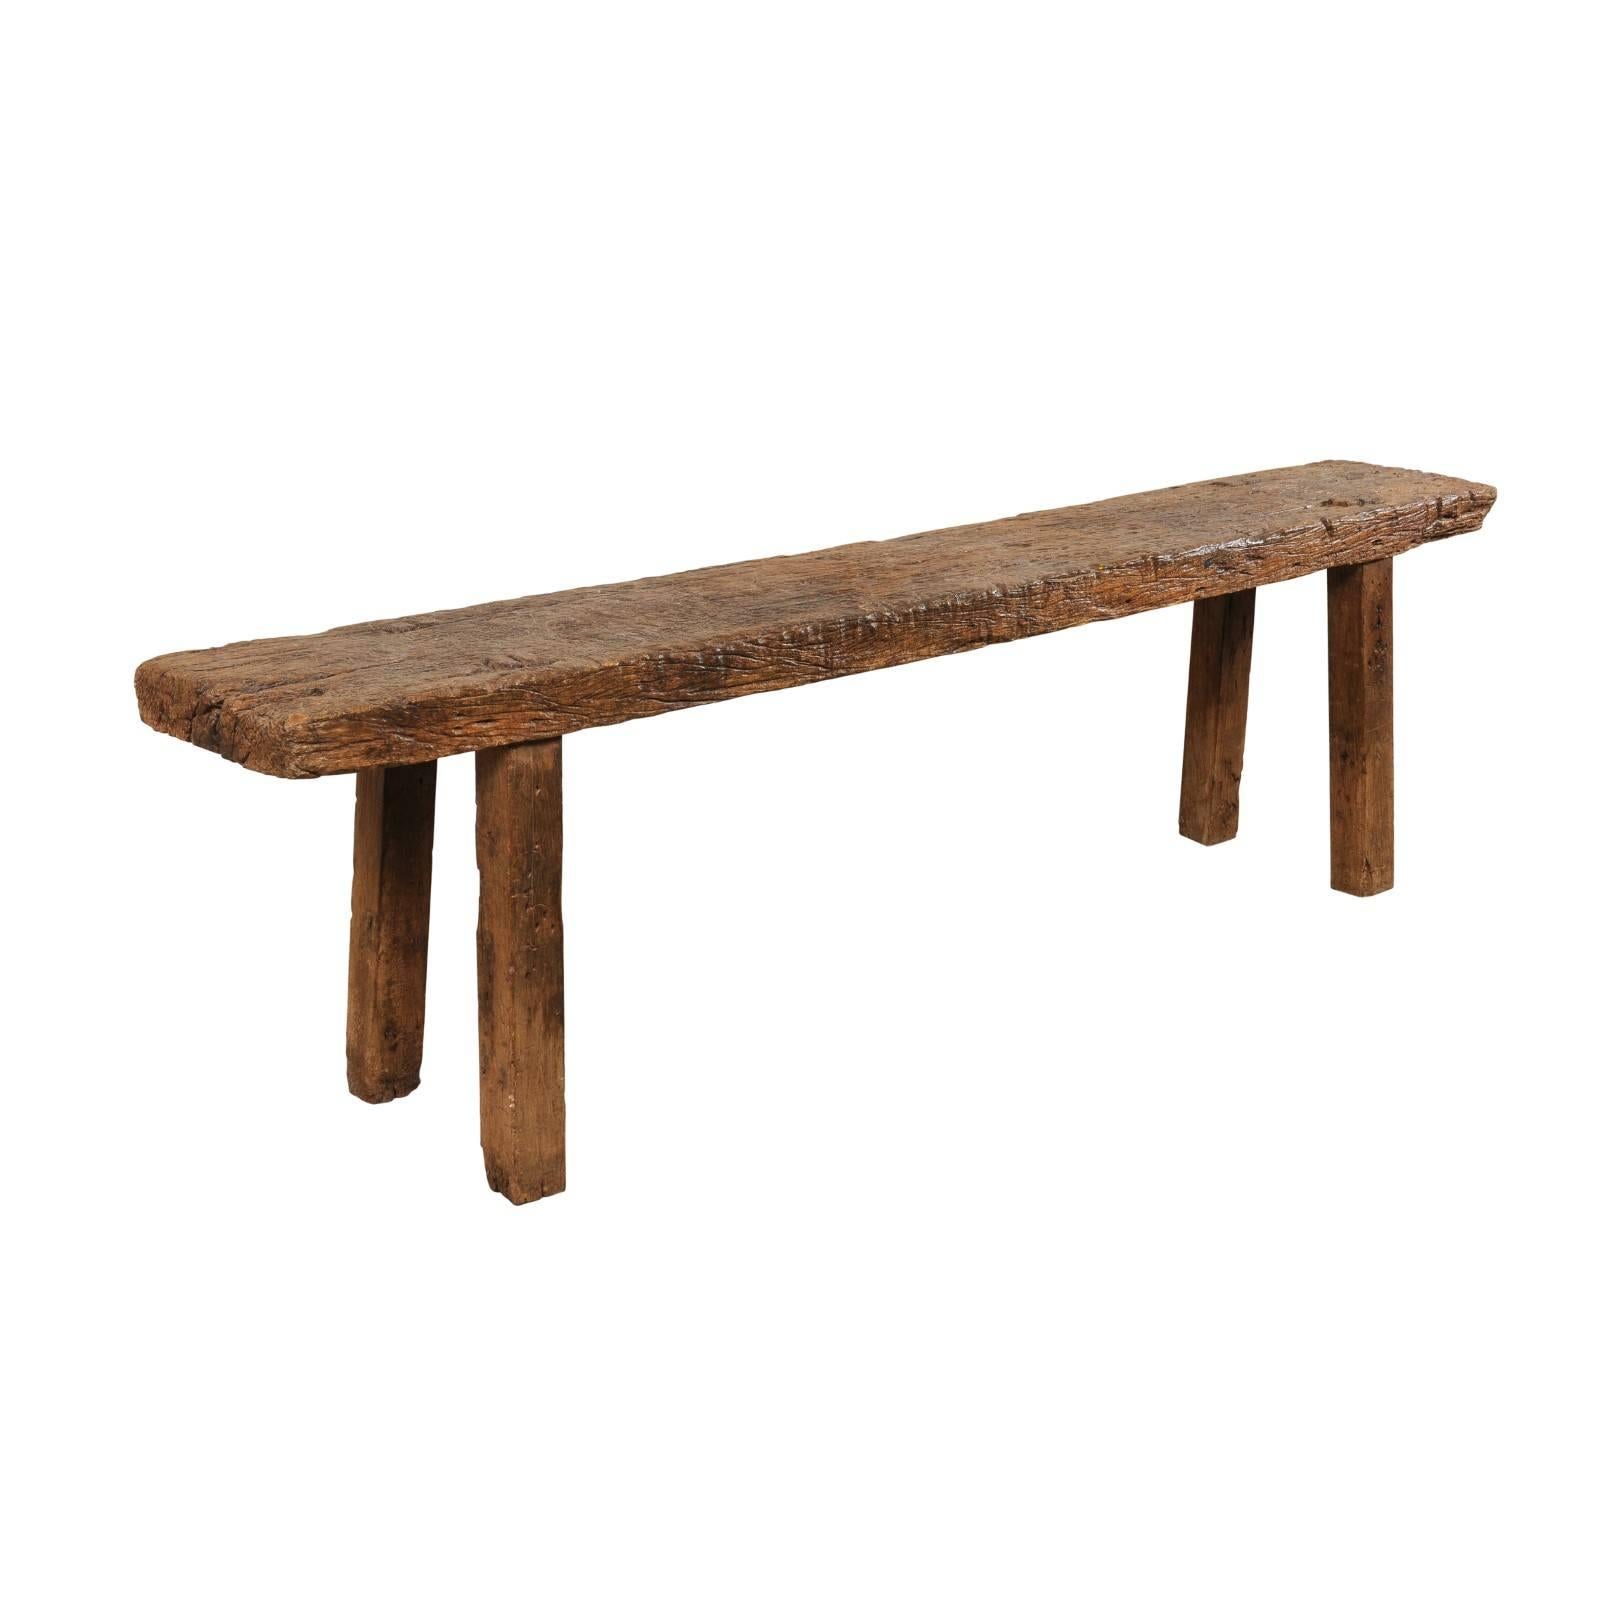 Brazilian 19th Century Rustic Wood Bench-Style Sofa or Window Table